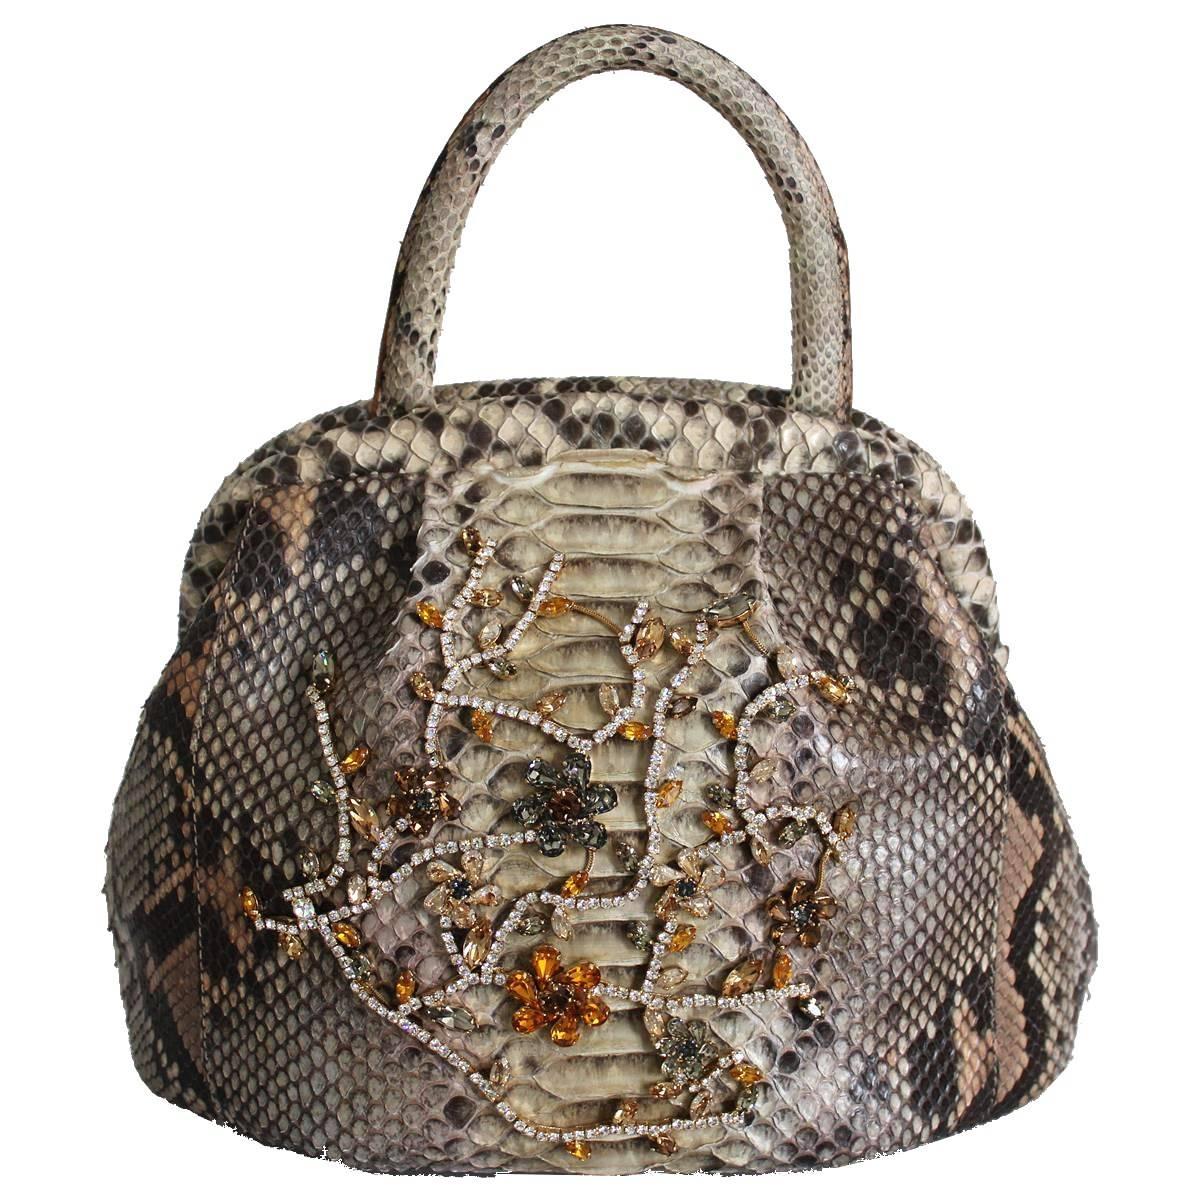 Ghiblie, Firenze Jewel python bag